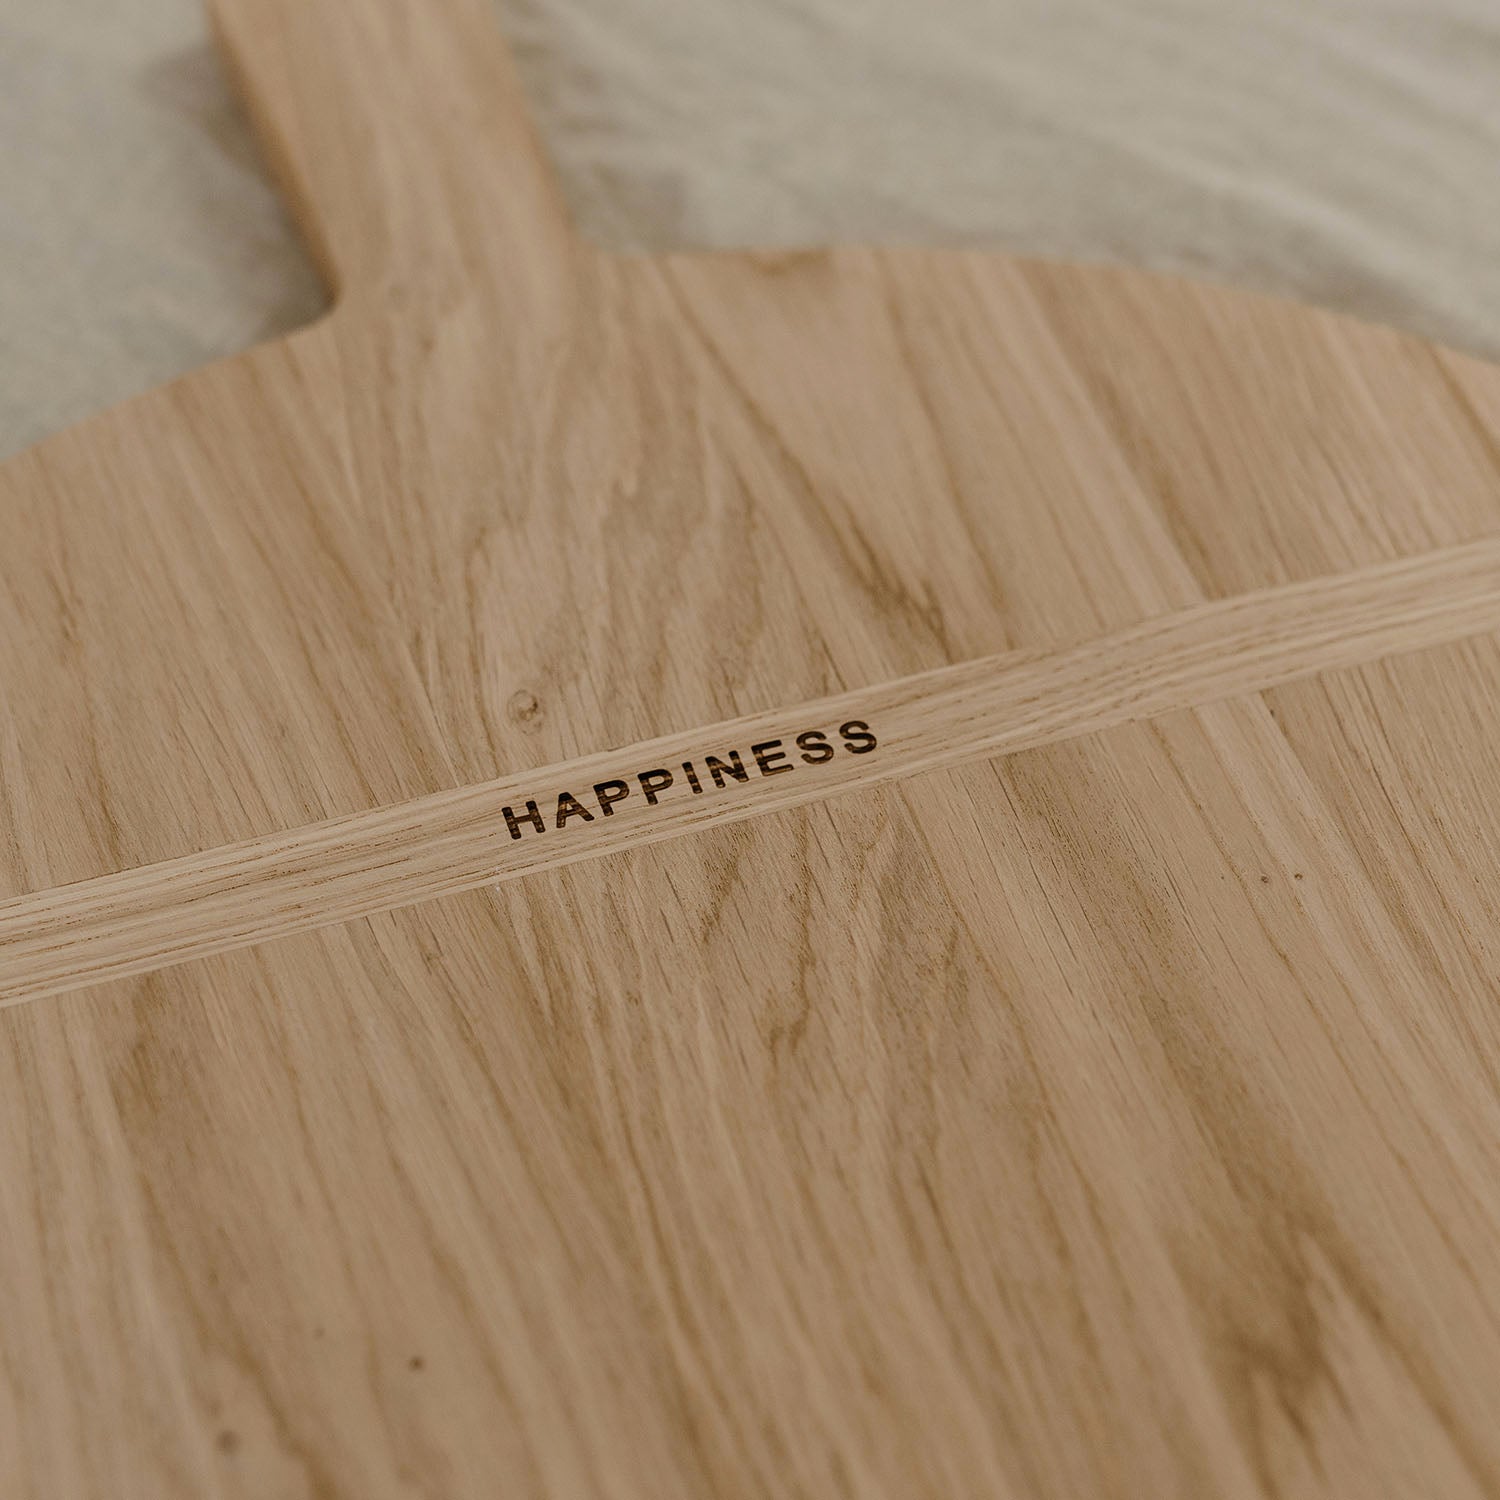 Holzbrett aus Eiche Happiness 55cm